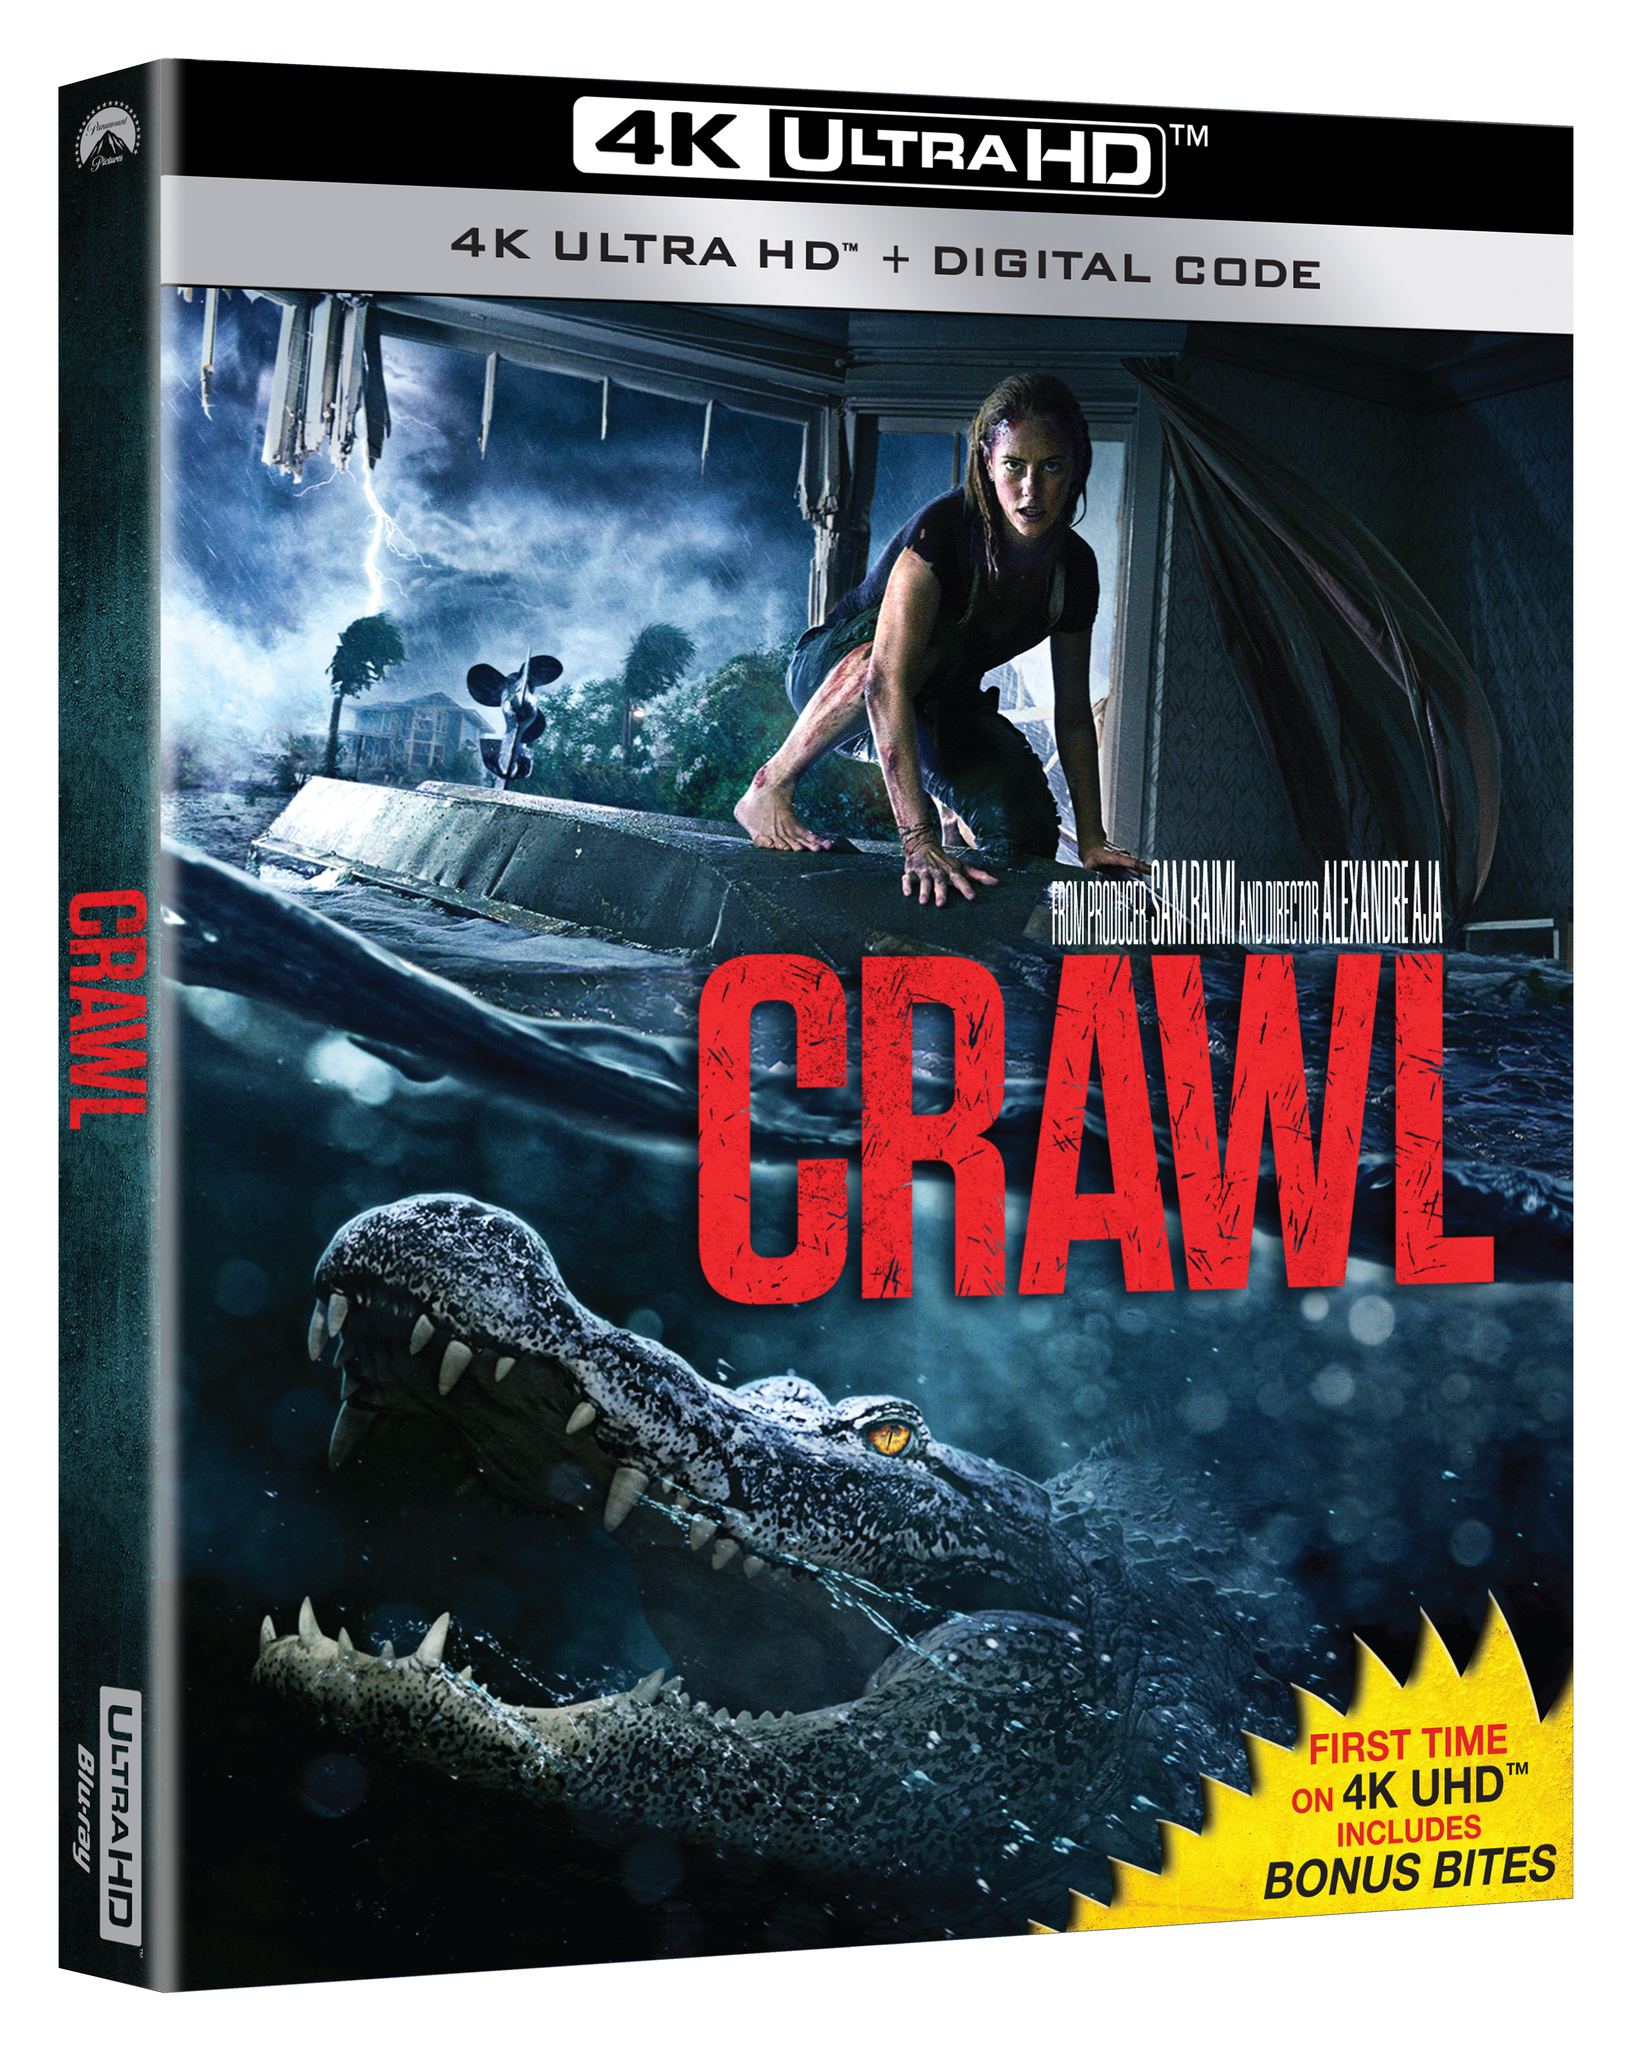 Crawl (DVD) [2019]